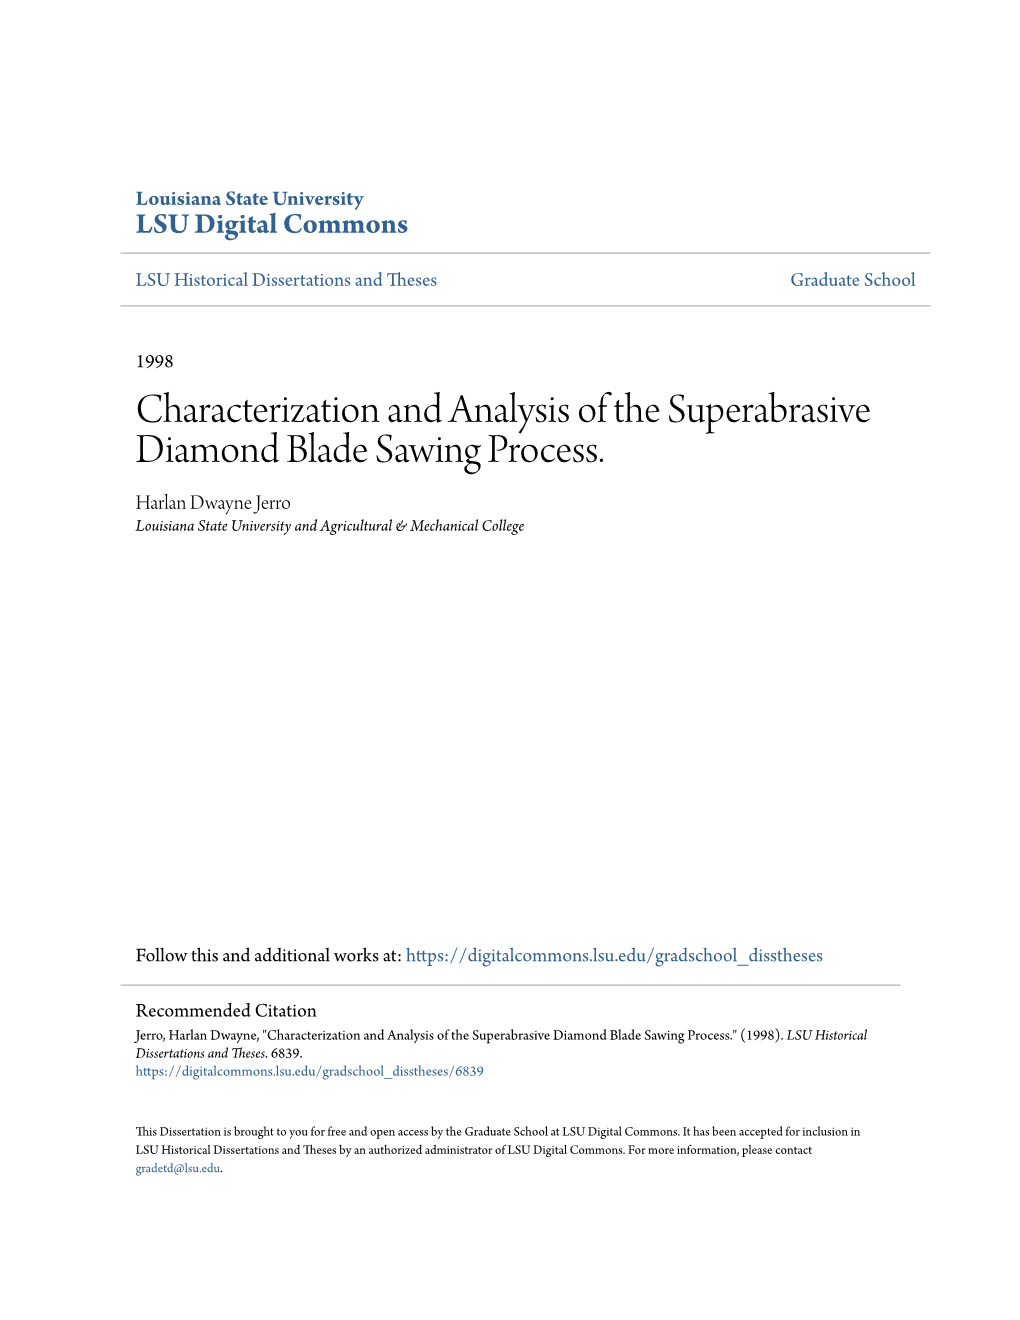 Characterization and Analysis of the Superabrasive Diamond Blade Sawing Process